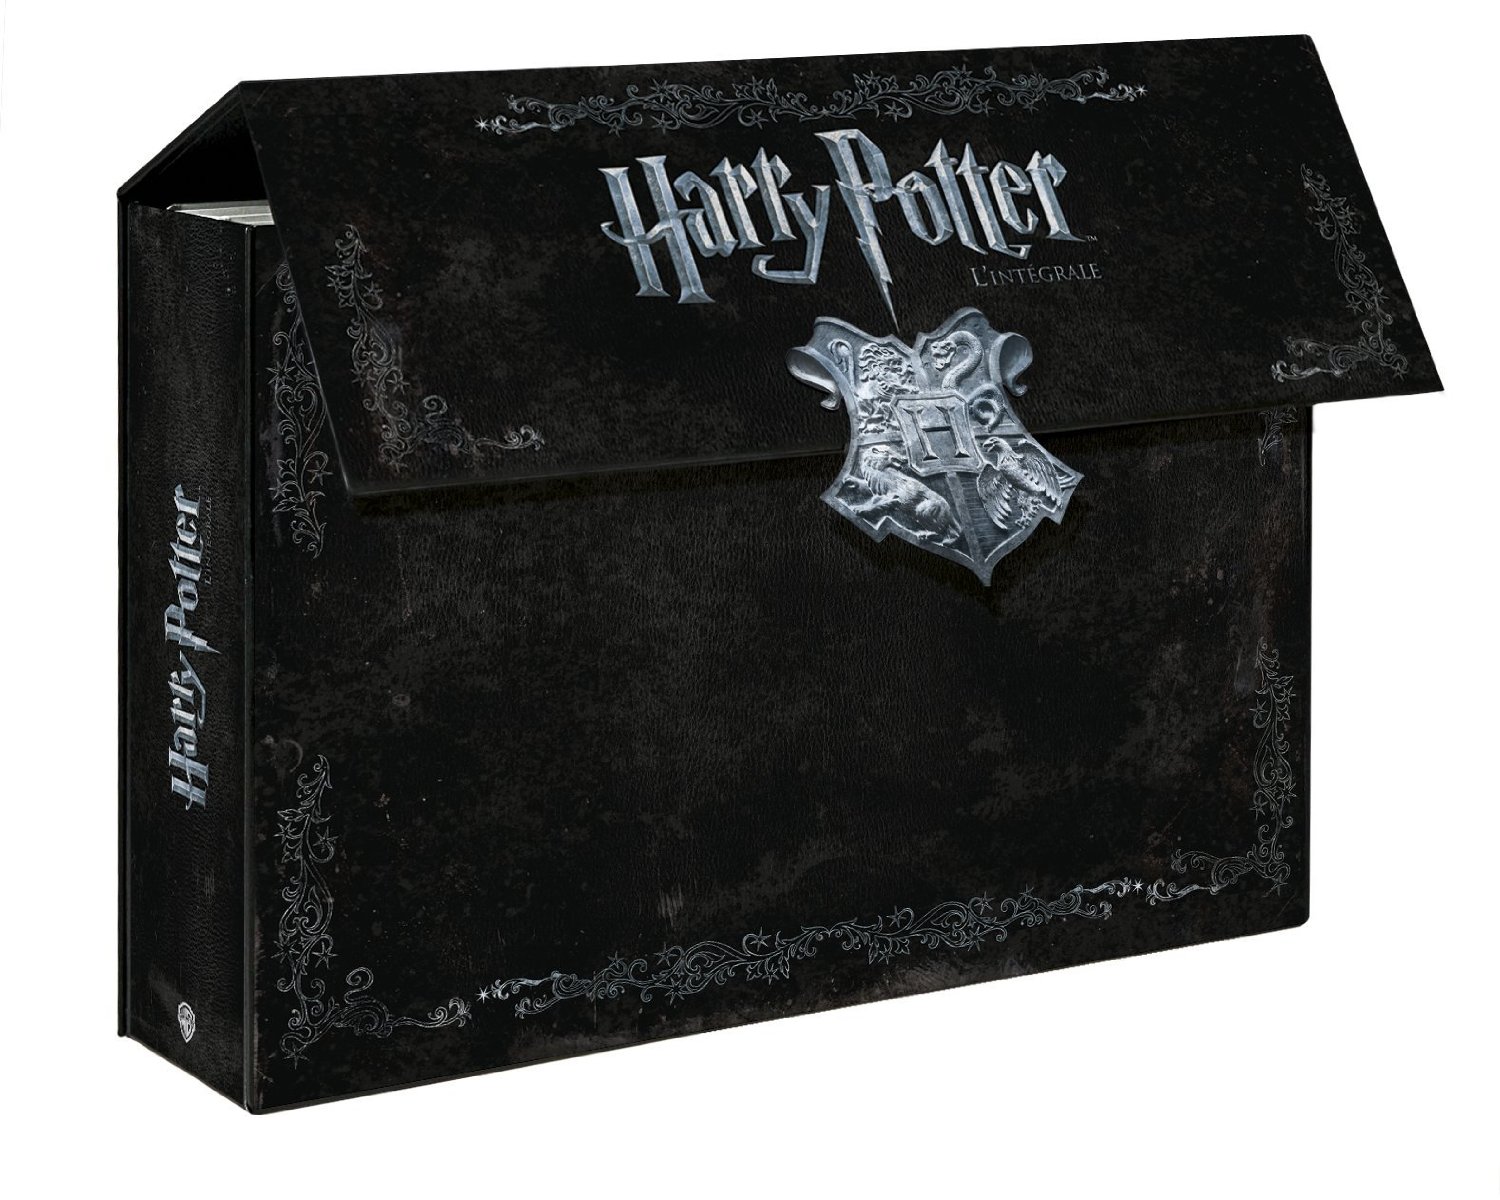 Intégrale Harry Potter 8 DVD